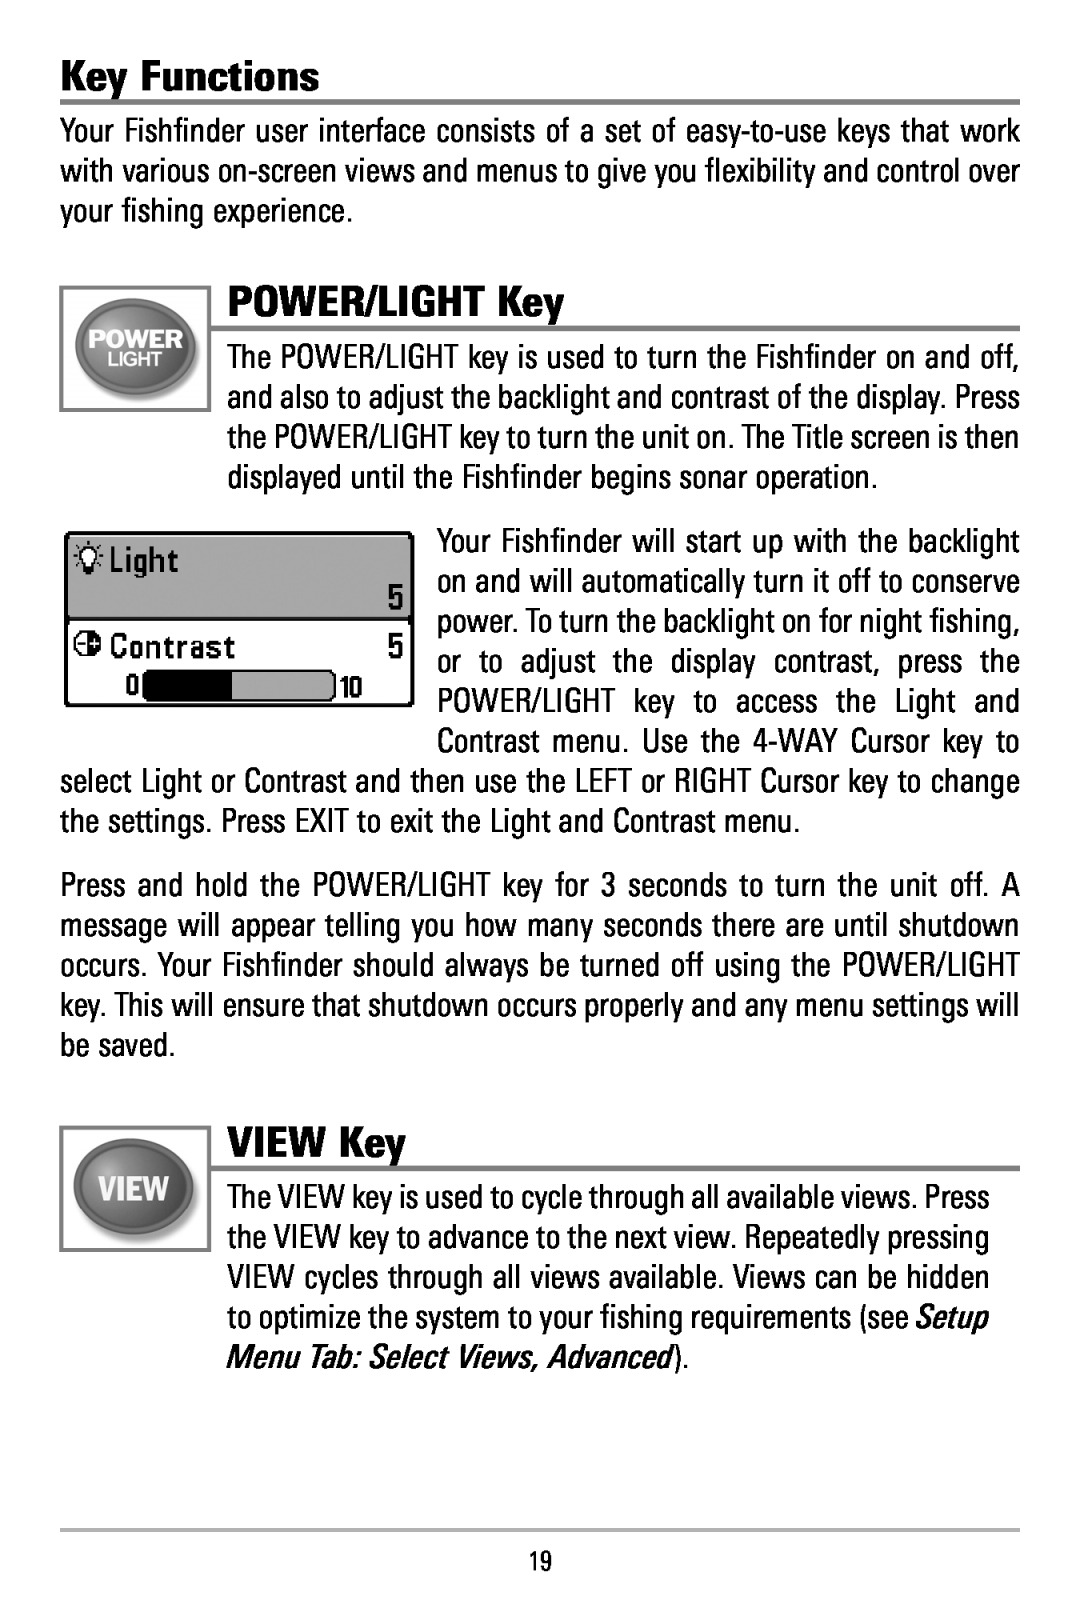 Humminbird 515, 500 series manual Key Functions, POWER/LIGHT Key, VIEW Key 